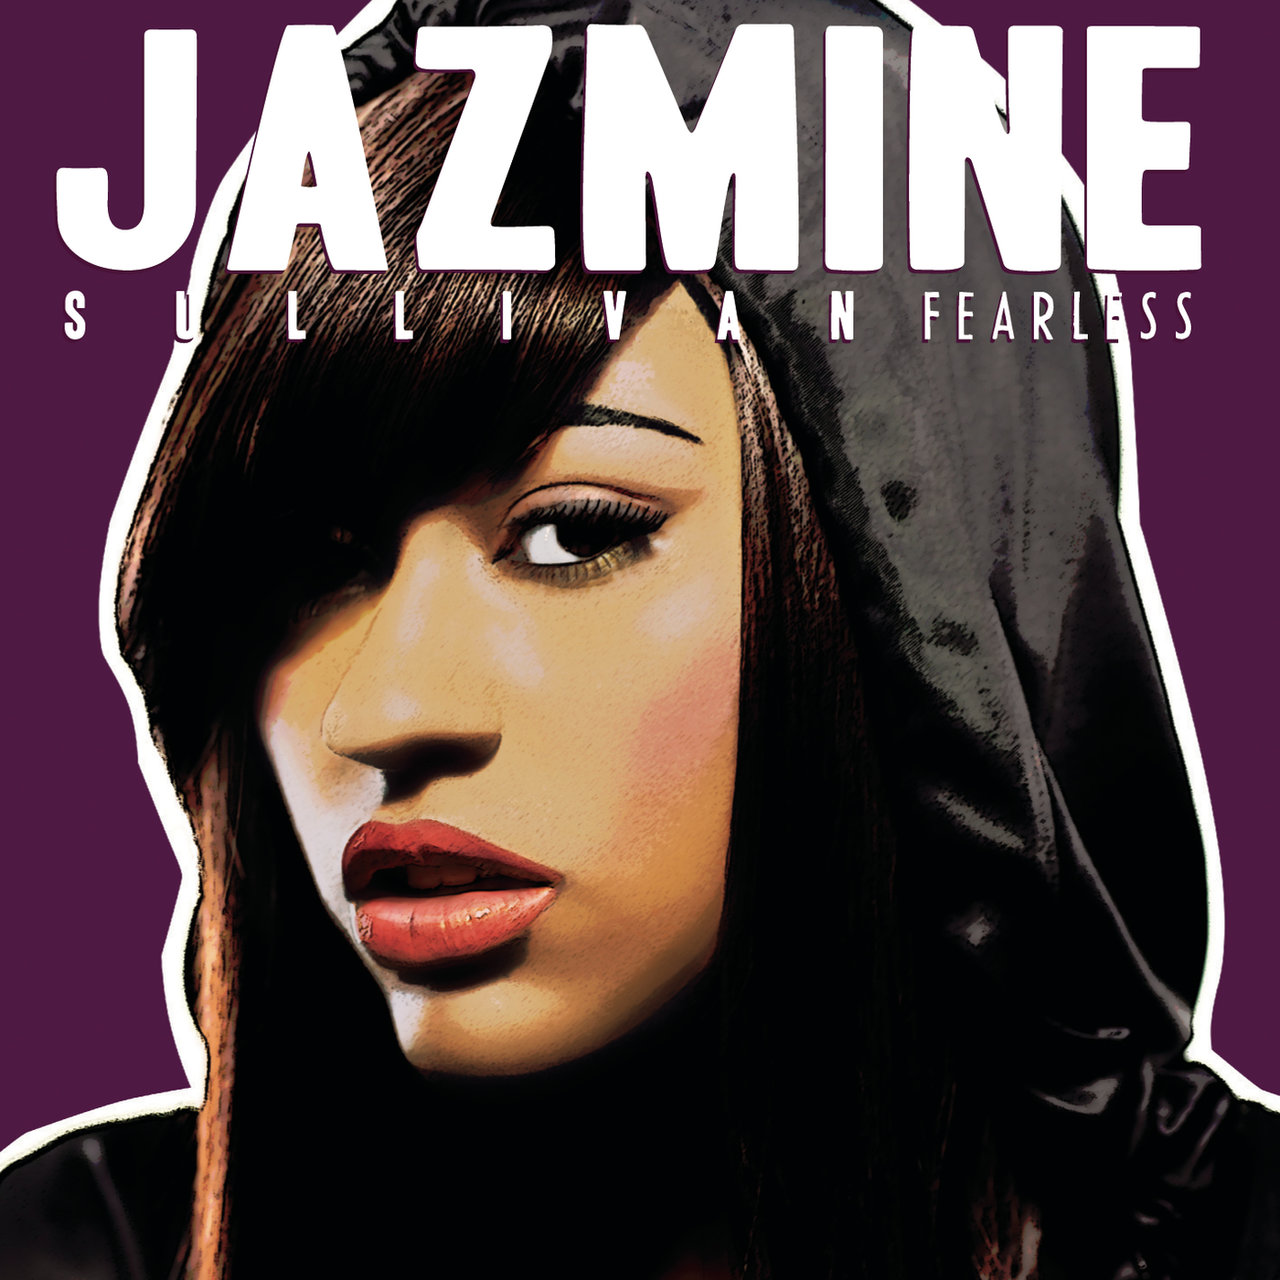 Jazmine Sullivan - Fearless (Cover)